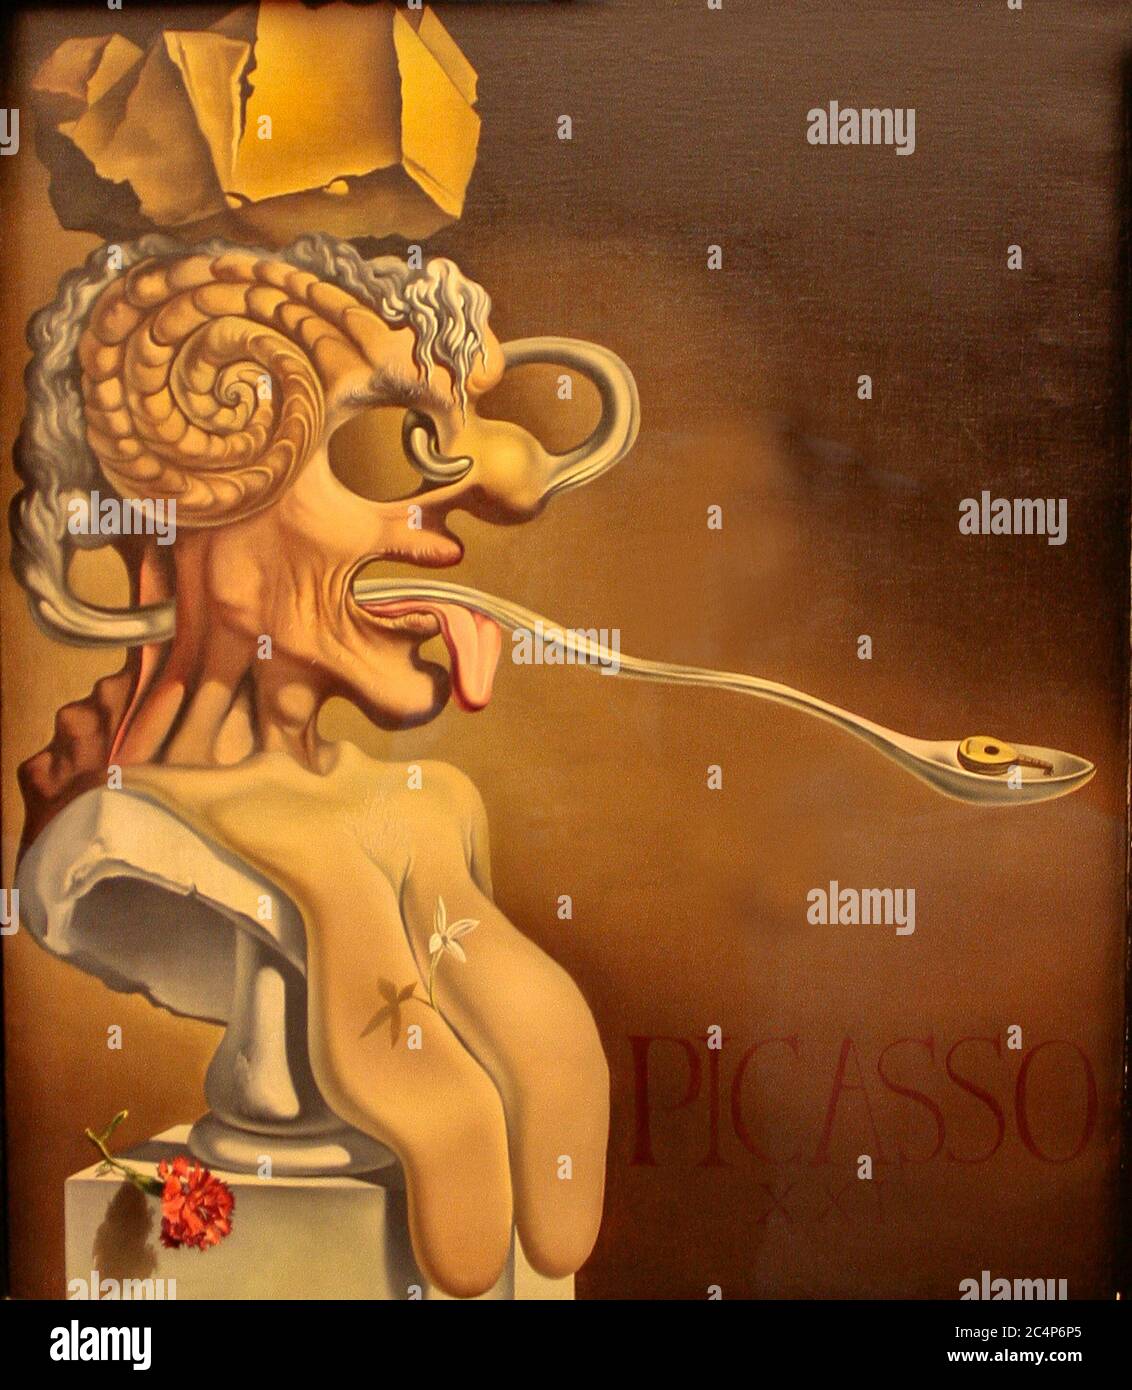 Figueres, L'Alt Empordà, Provinz Girona, Katalonien, Spanien. Das Salvador Dalí Theater-Museum (Teatre Museu Dalì). Porträt von Pablo Picasso im 21. Jahrhundert, 1947. Abmessungen: 65,5 x 56 cm. Öl auf Leinwand. Stockfoto